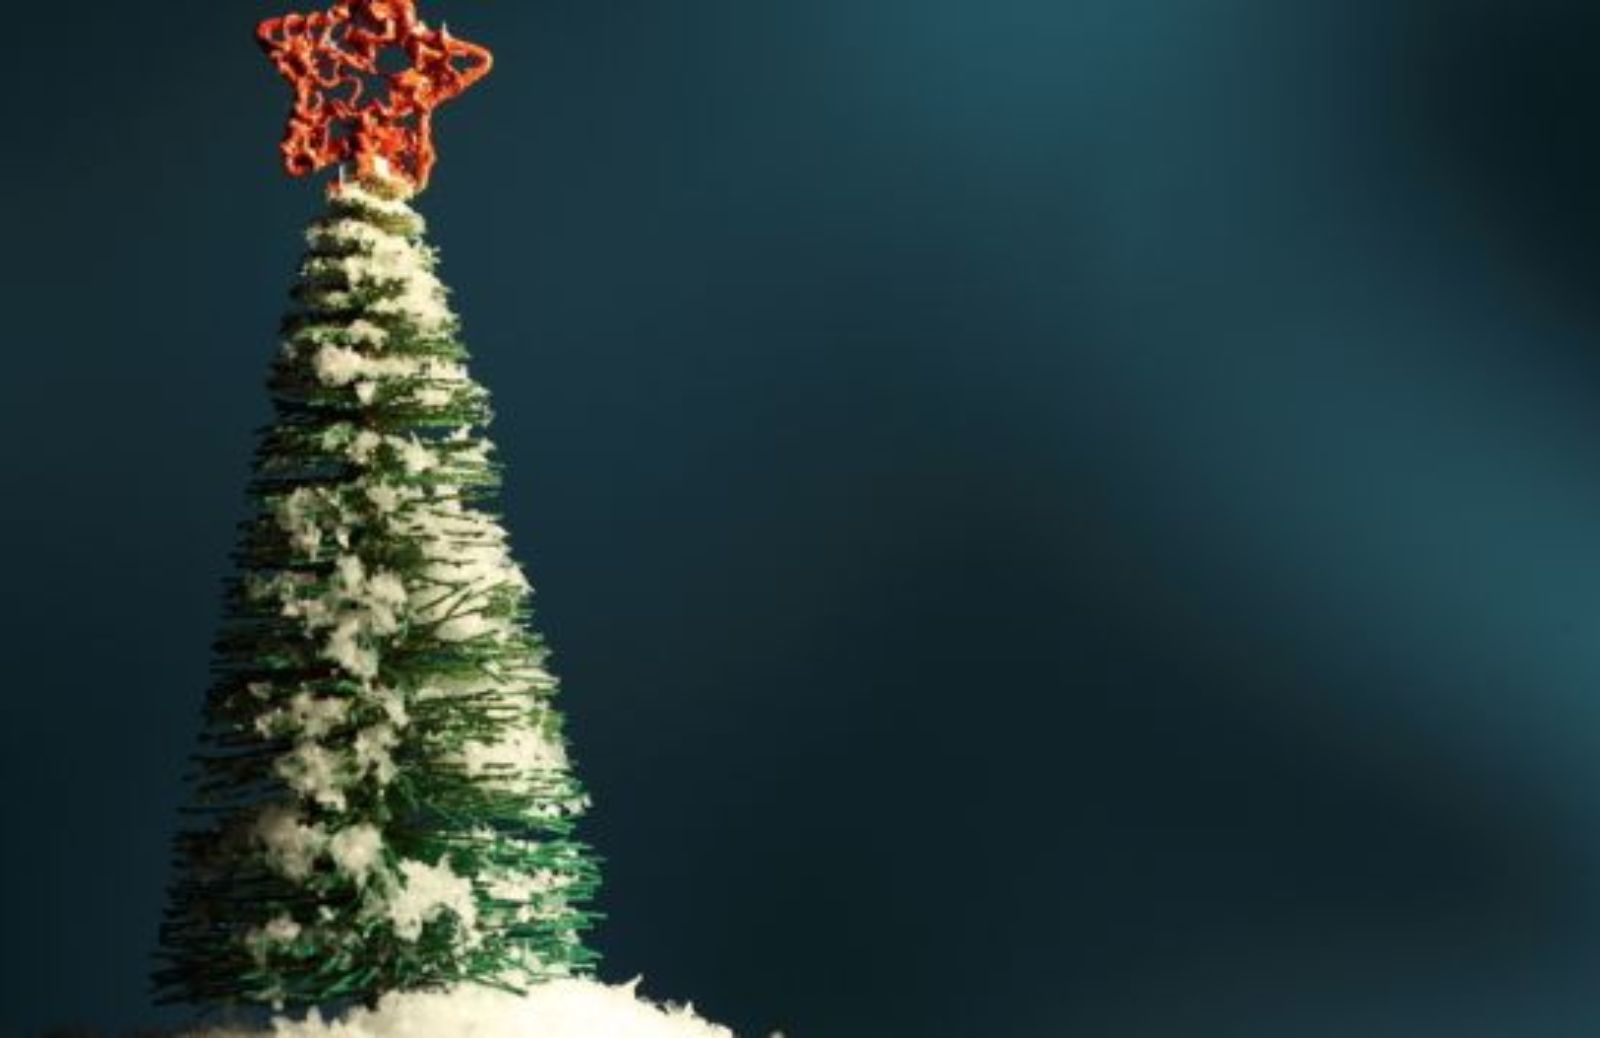 Decorazioni natalizie fai da te: addobbi per l’albero di Natale